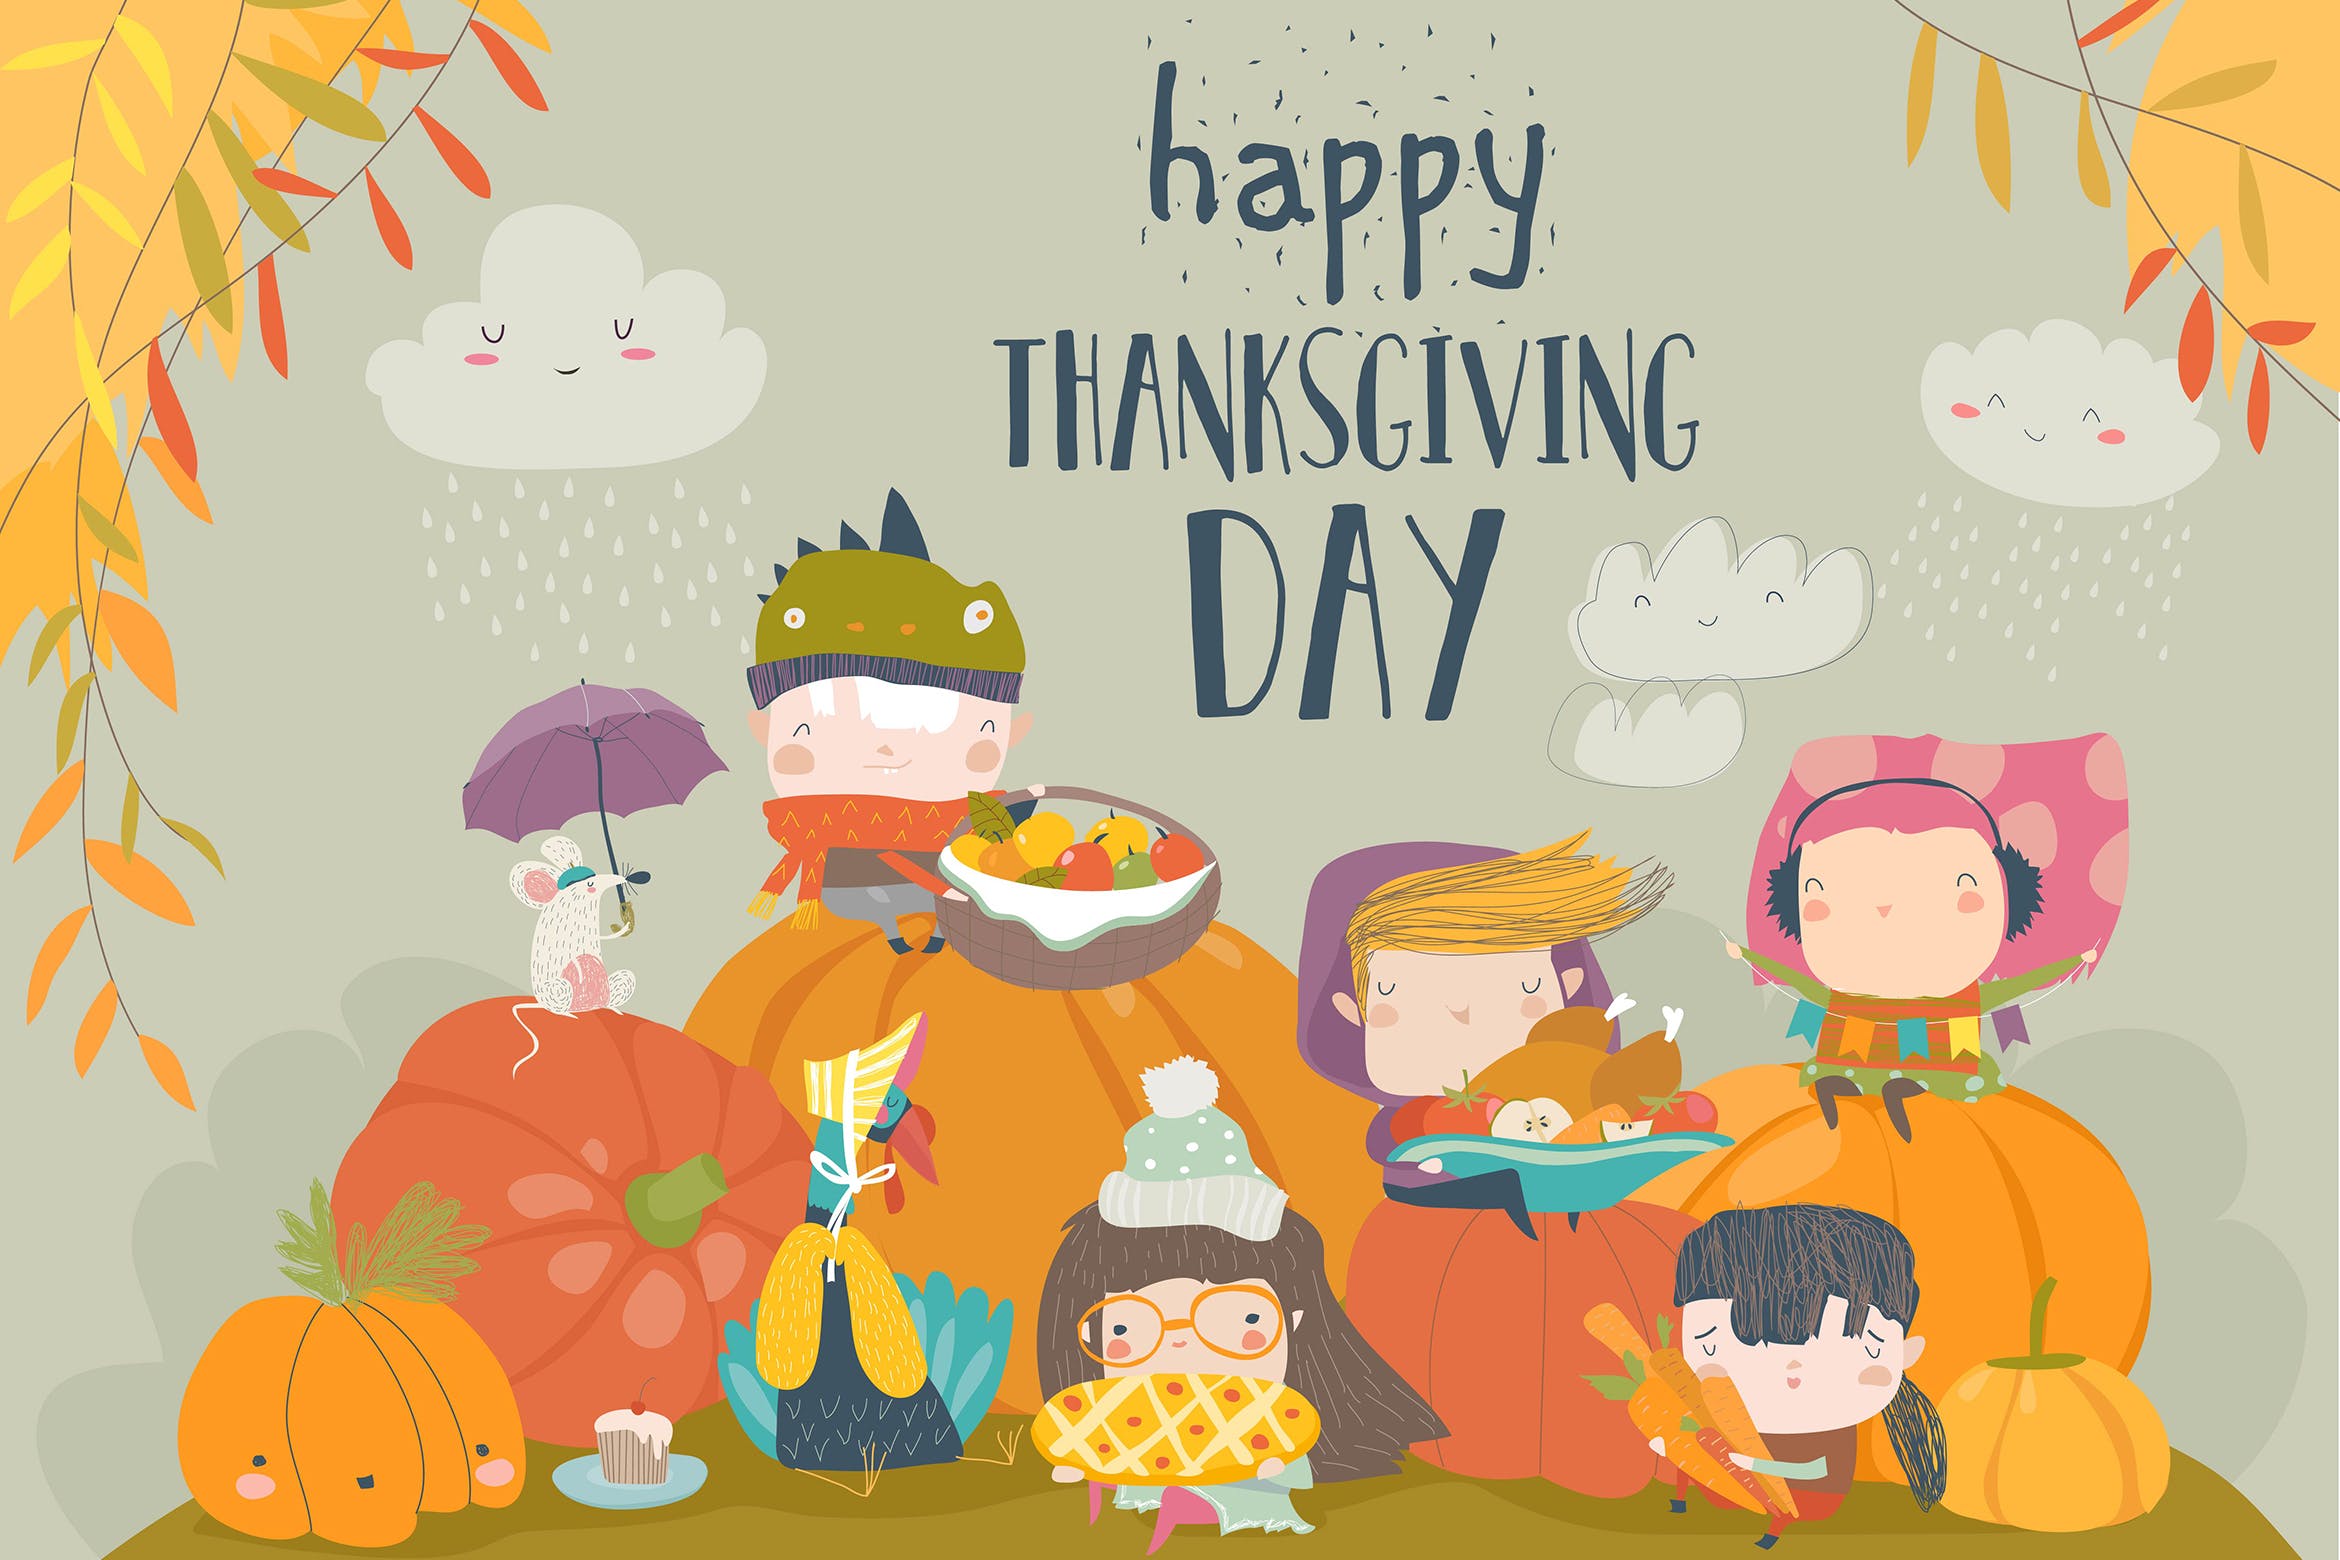 儿童感恩节活动矢量手绘插画素材 Cartoon children celebrating Thanksgiving Day with插图